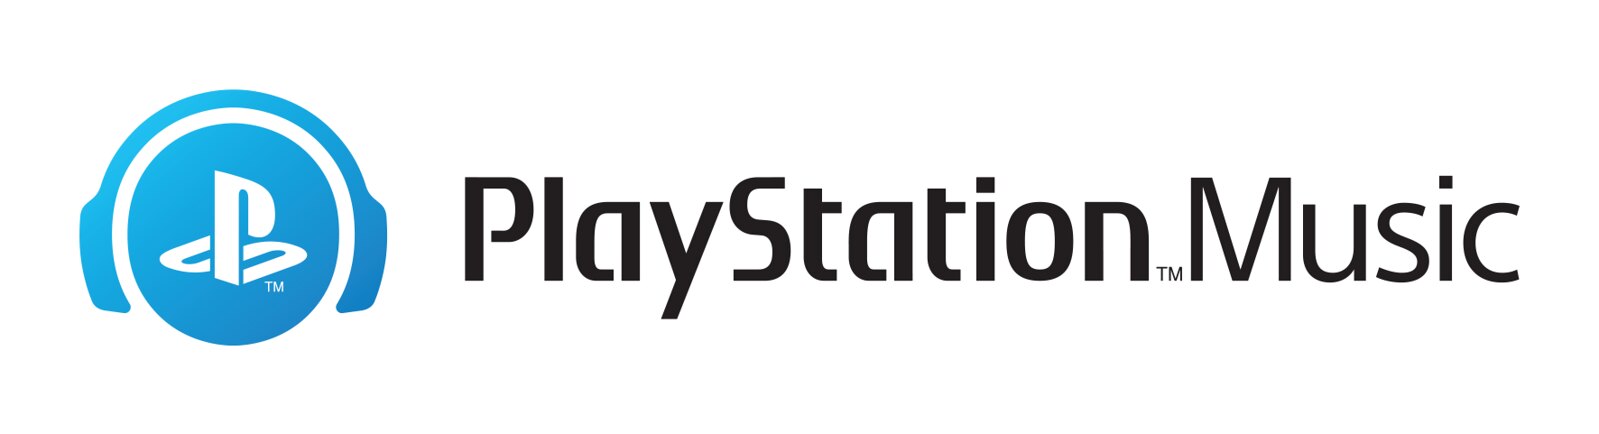 PlayStation Music Logo